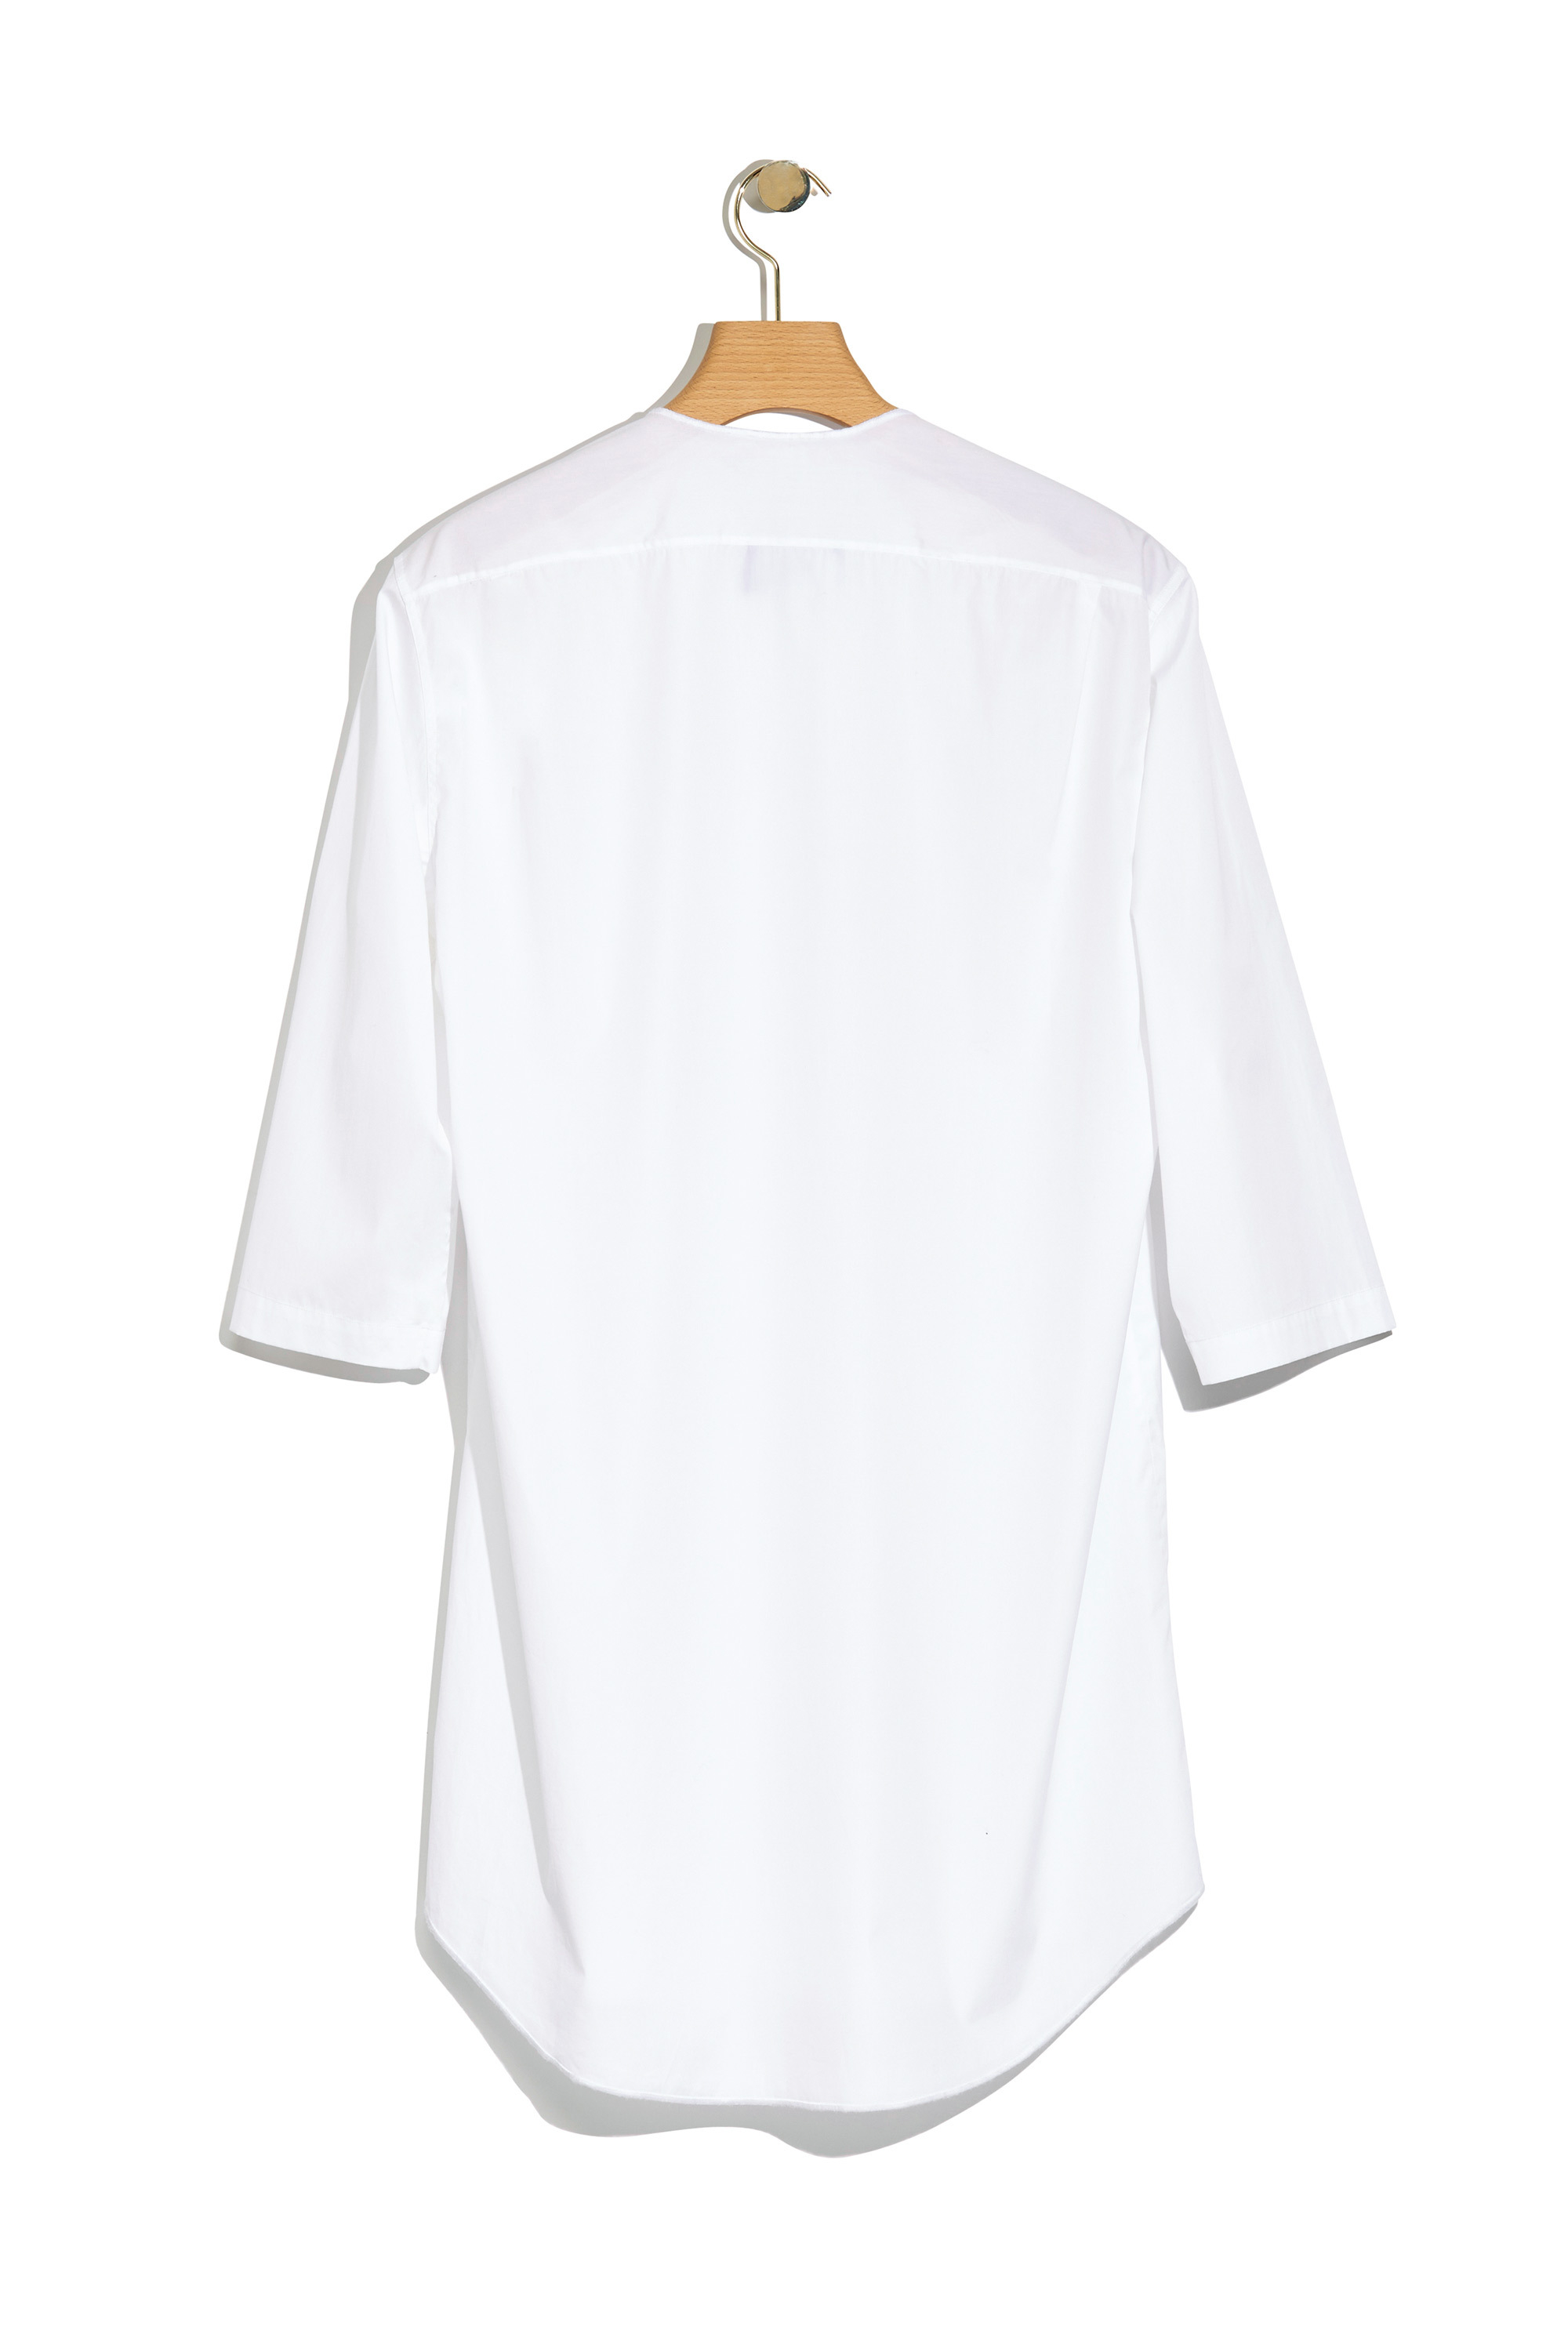 Lyst - 3.1 phillip lim Oversized Short-sleeve Button-up in White for Men